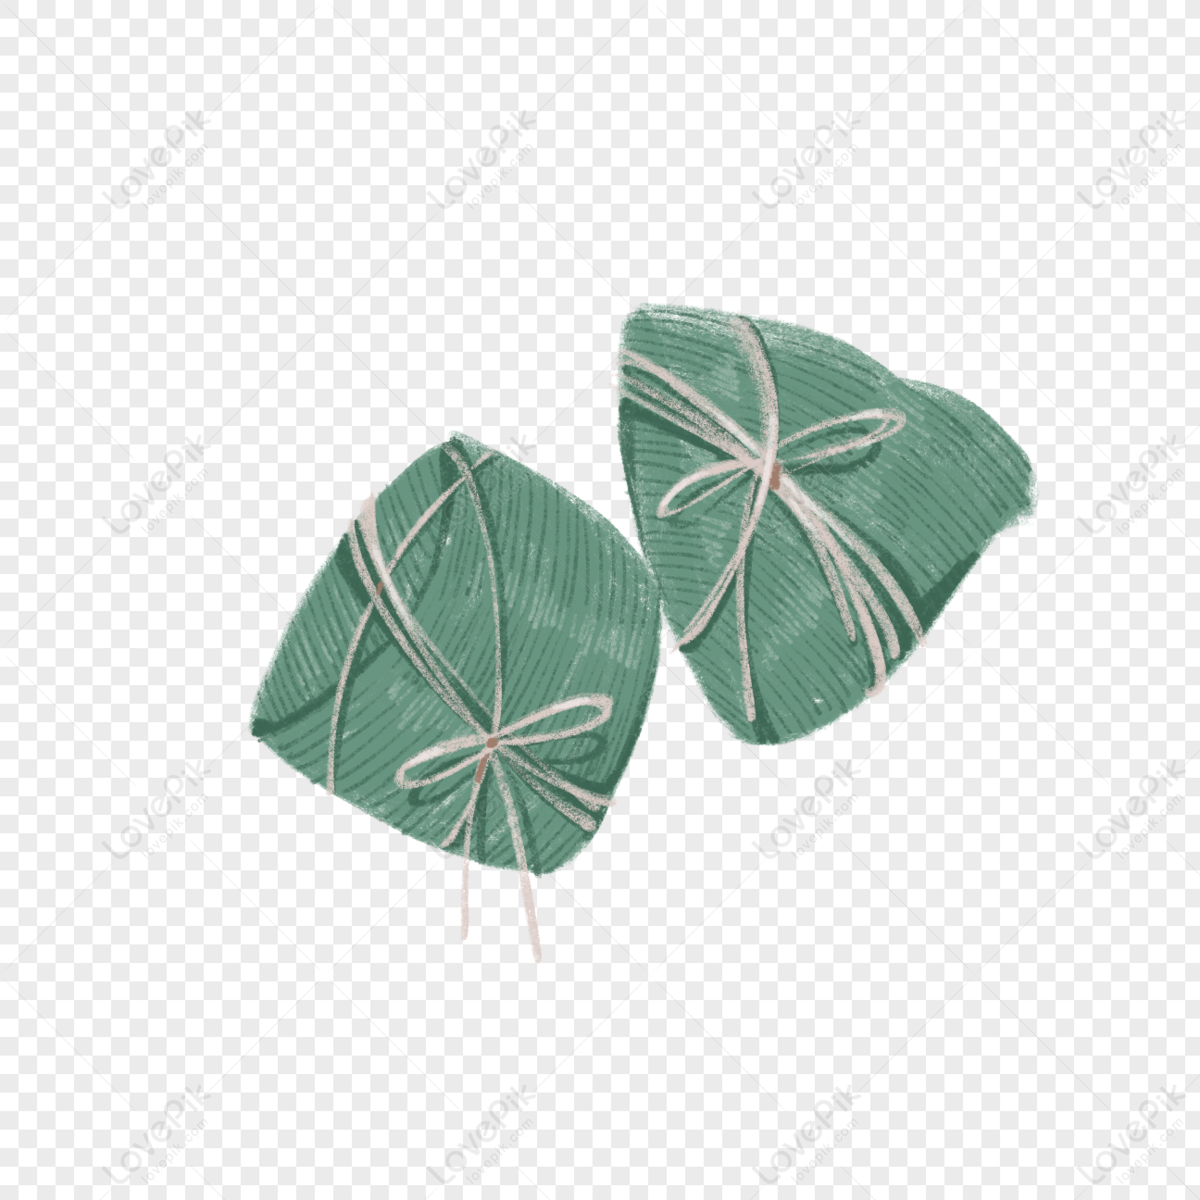 Dragon Boat Festival dumplings, green leaves, gray green, green paper png image free download